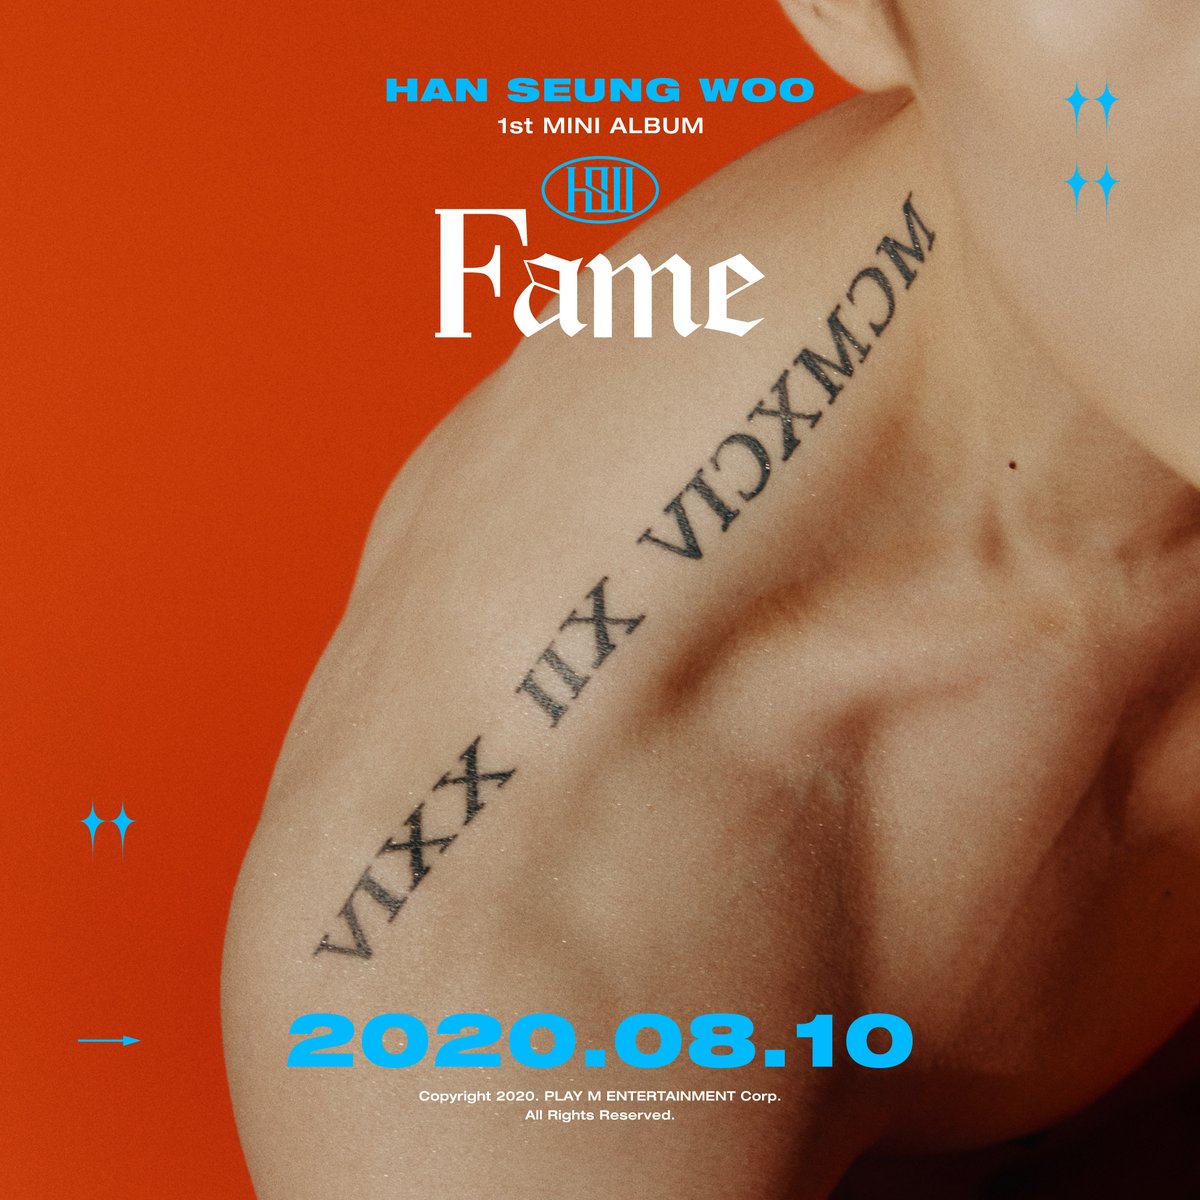 VICTON(빅톤) on Twitter: "[#한승우] HAN SEUNG WOO 1st Mini Album [Fame] WOO ver.  2020.08.10 18:00 #VICTON #승우 #SEUNGWOO #Fame… "